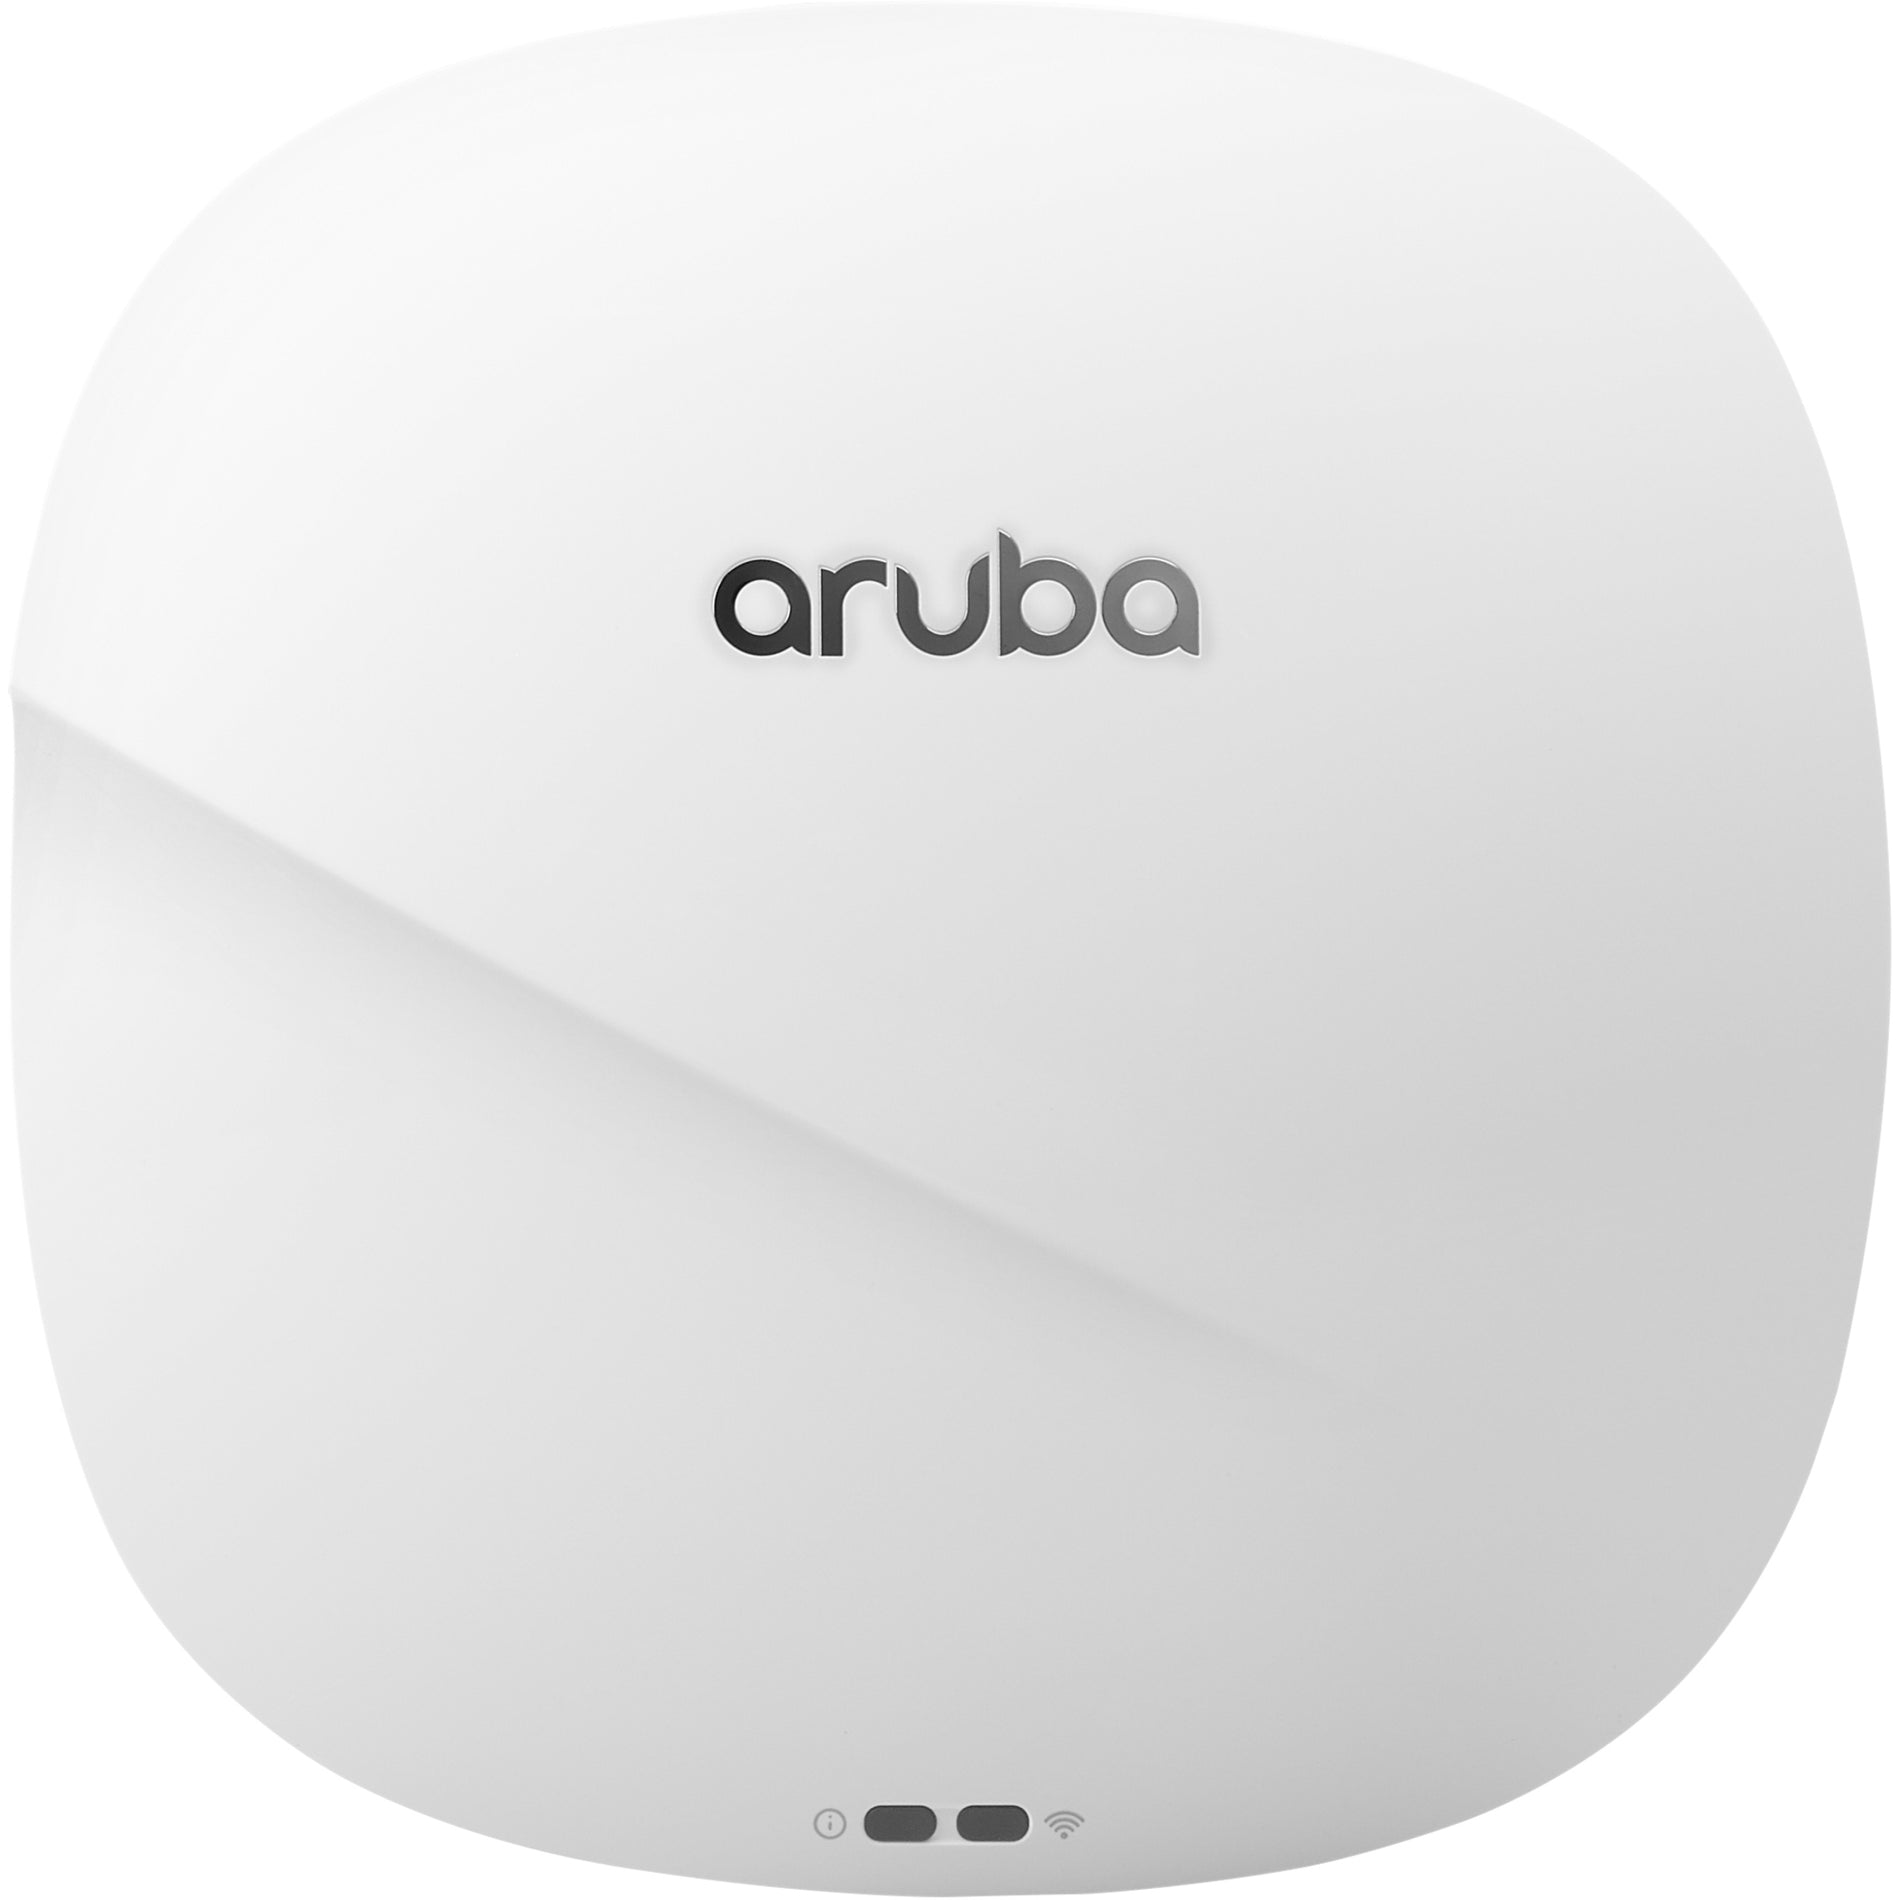 Aruba AP-345 Wireless Access Point - High-Speed 3 Gbit/s WiFi Connectivity [Discontinued]